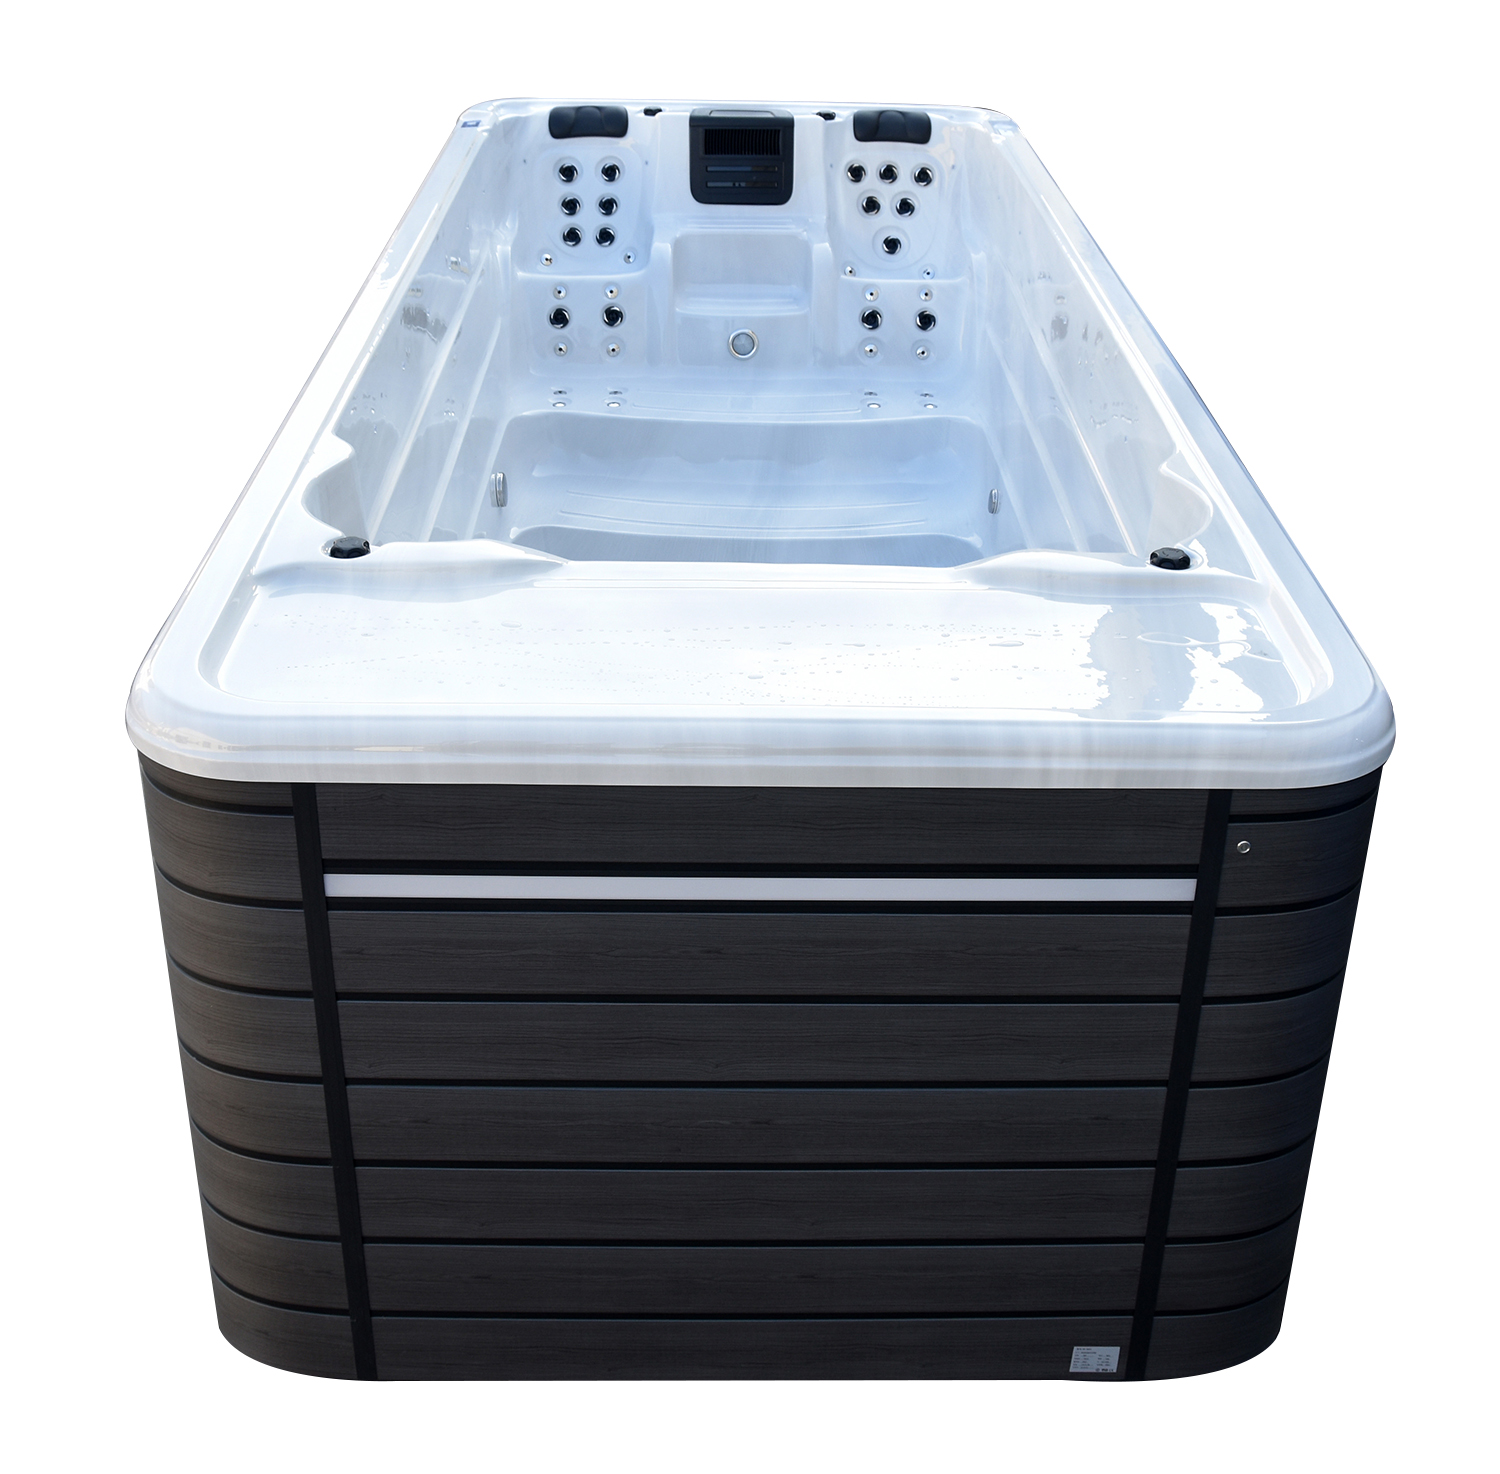 BG-6612 New design outdoor freestanding acrylic hydro massage pool